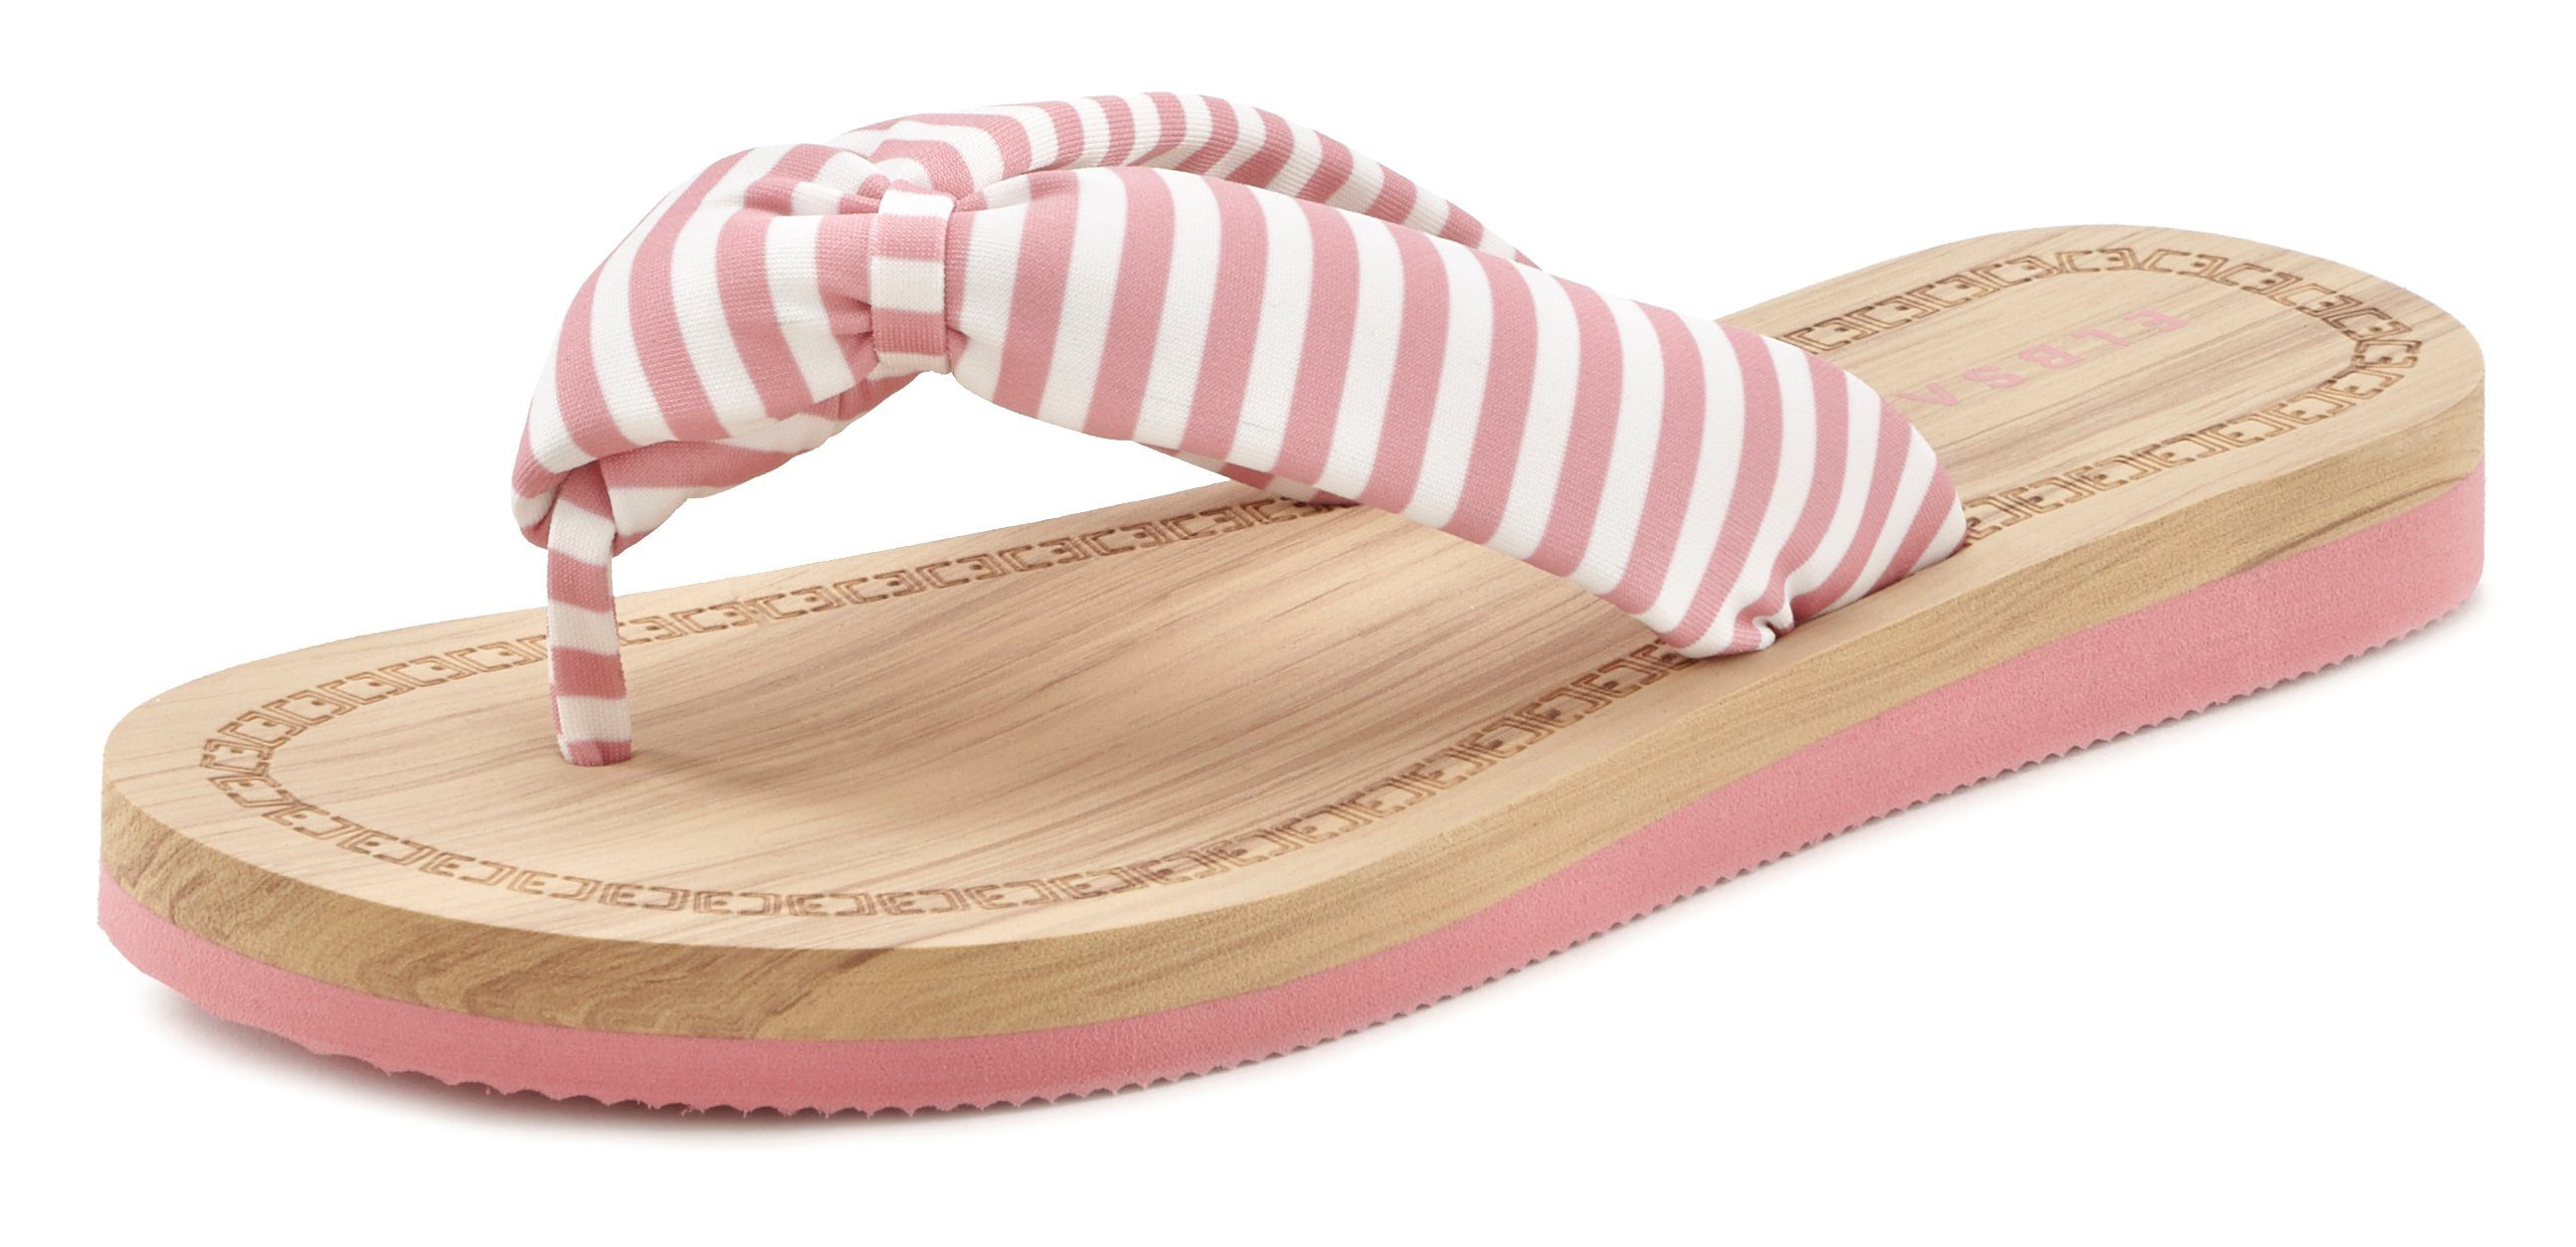 Elbsand Badezehentrenner Sandale, Pantolette, Badeschuh rosa-gestreift ultraleicht VEGAN